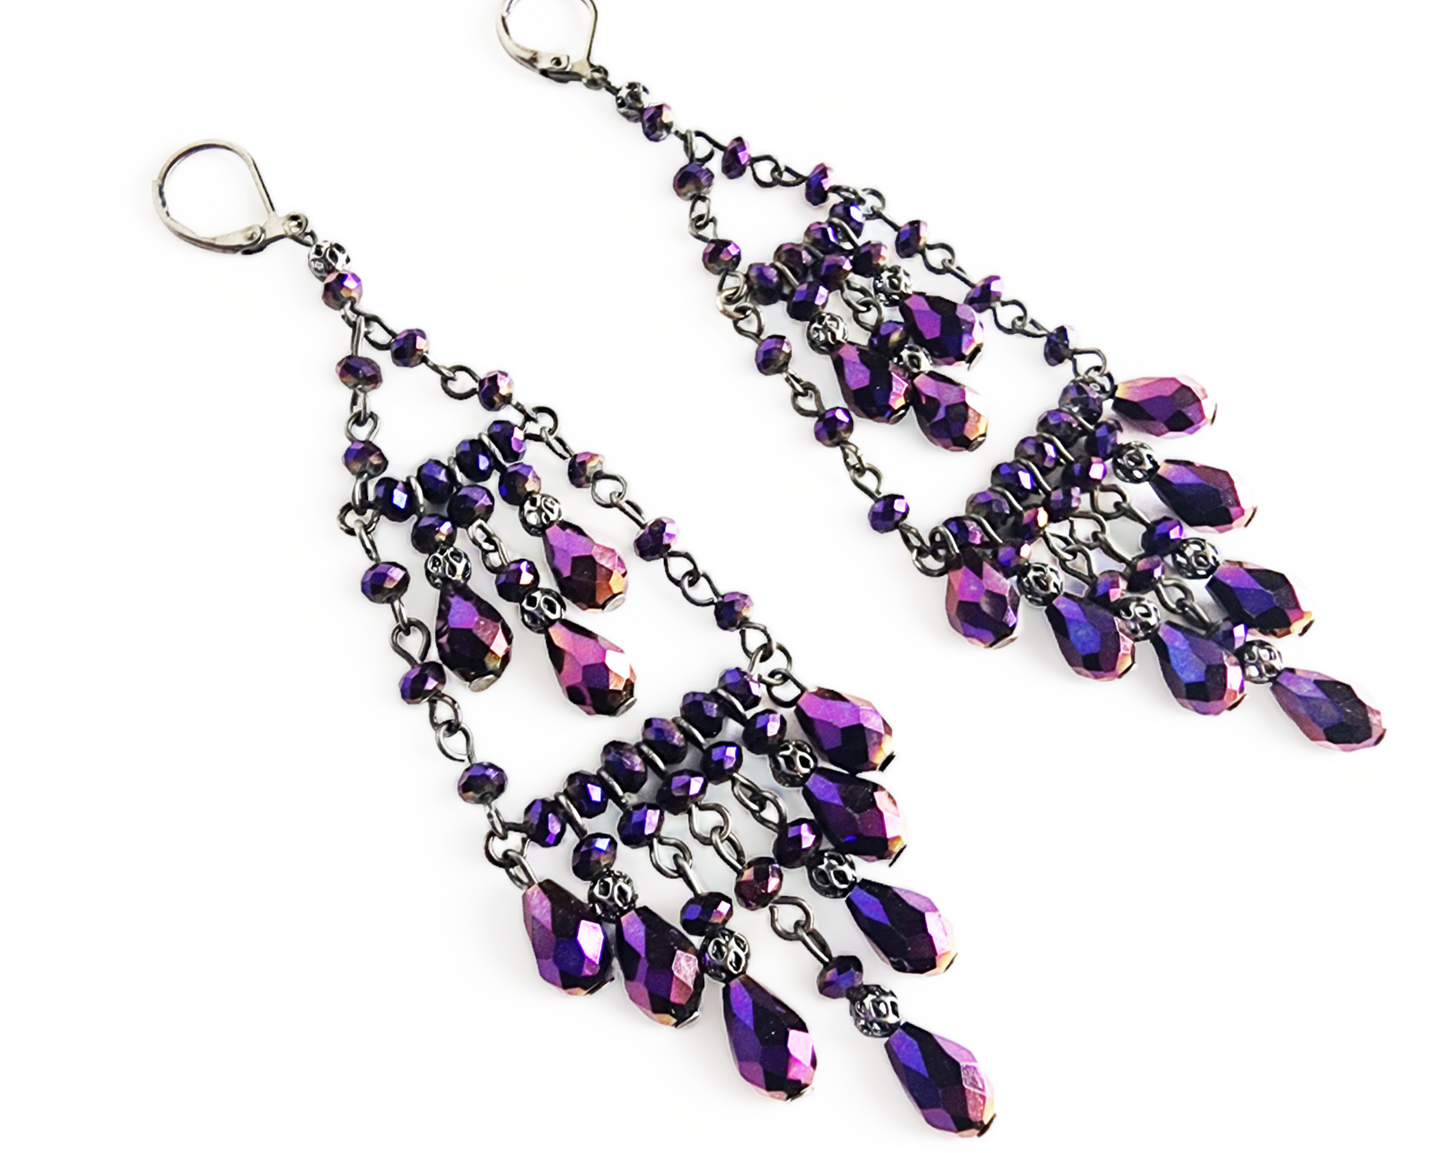 Long Victorian Inspired Purple Sparkle Chandelier Earrings, Extra Long Purple Crystal Earrings with black shinny Gun metal